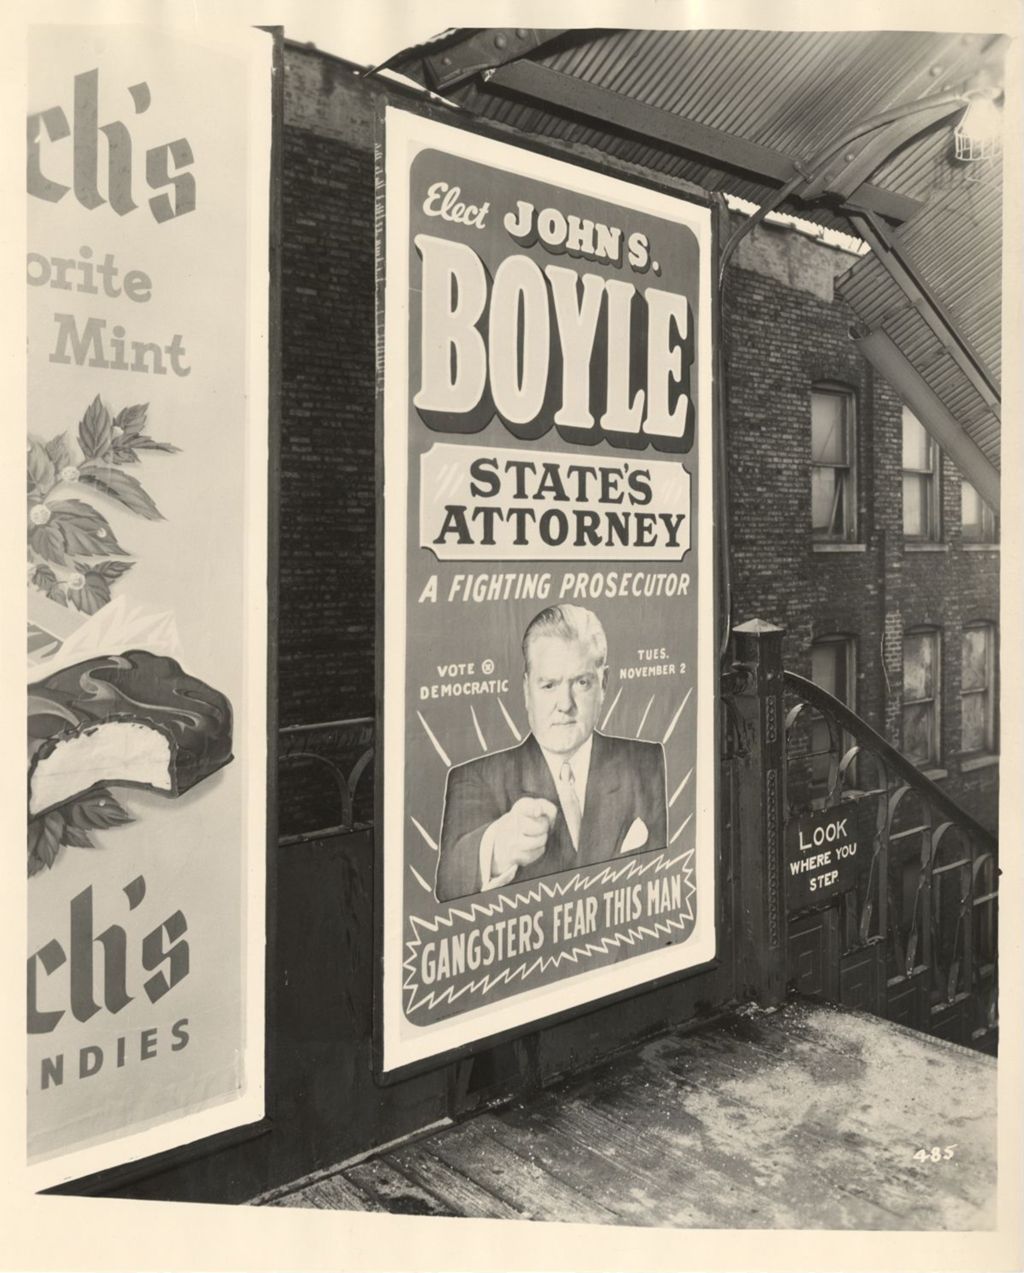 Miniature of John S. Boyle campaign sign